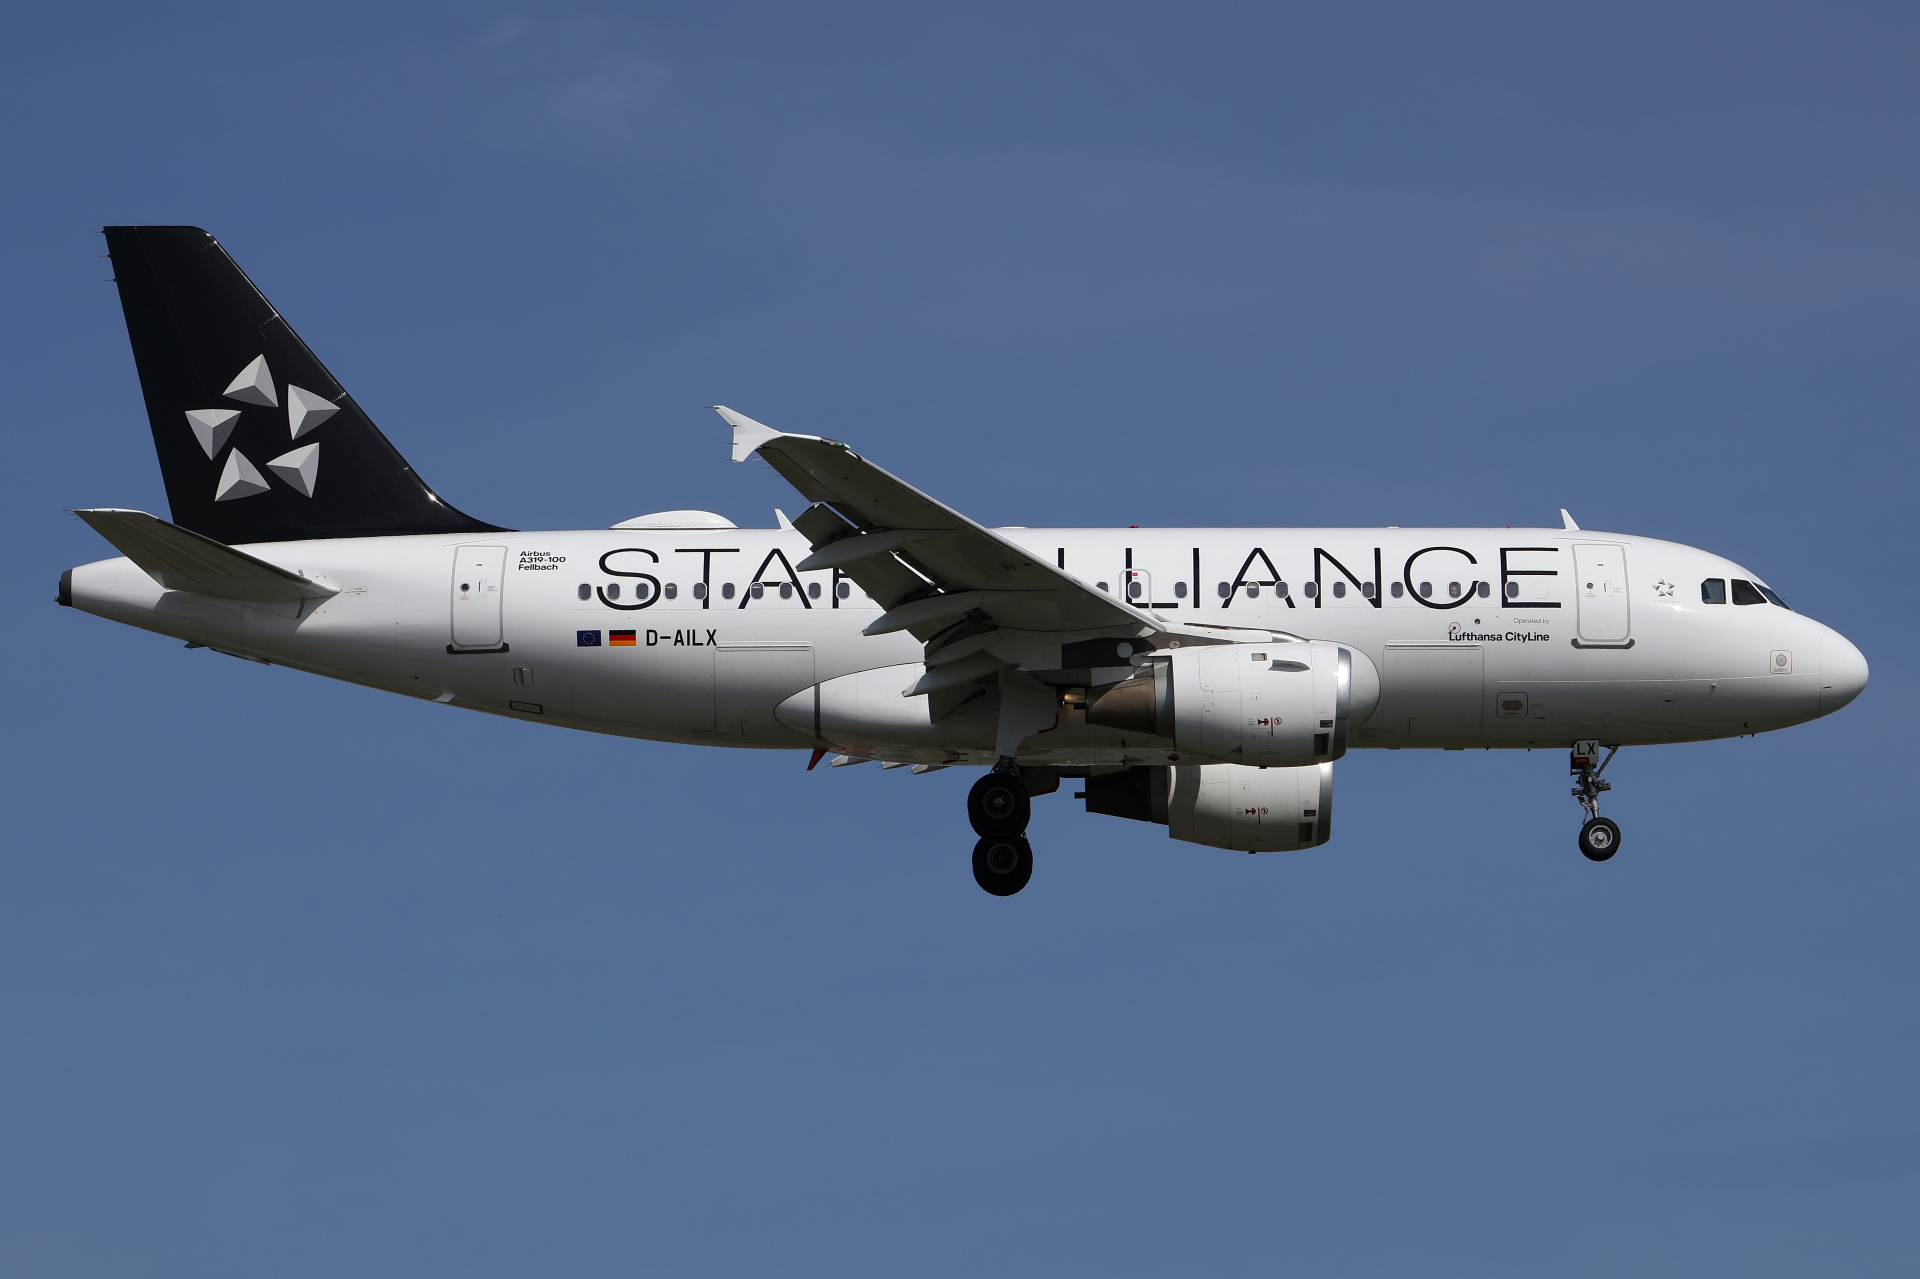 D-AILX, Lufthansa CityLine (Star Alliance livery) (Aircraft » EPWA Spotting » Airbus A319-100 » Lufthansa)